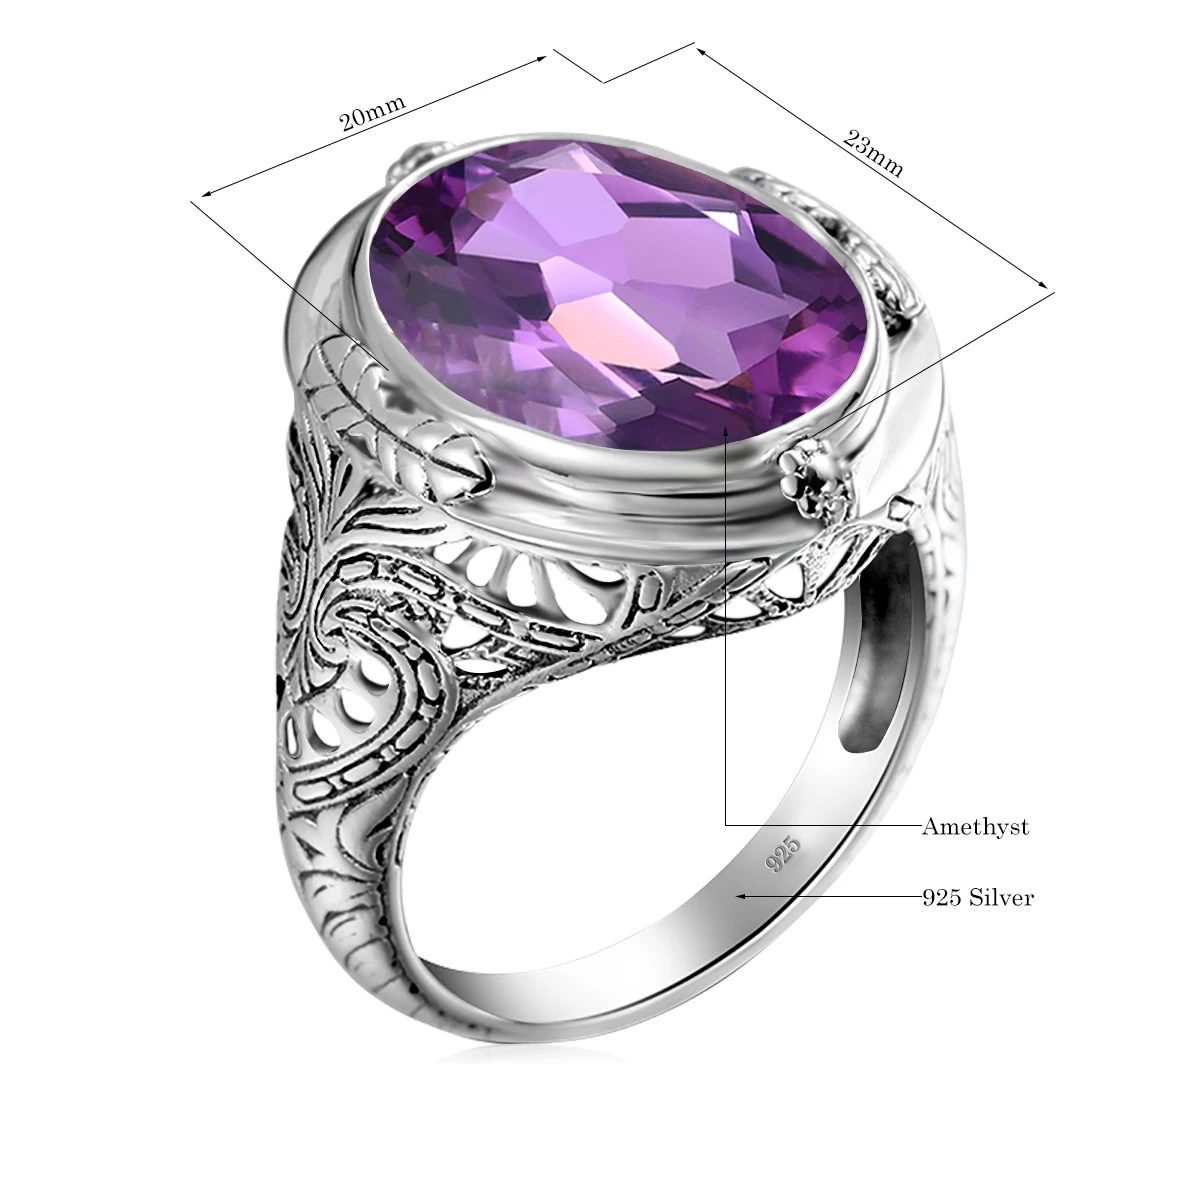 Multi Amethyst Ring,925 Sterling Silver Ring,Gemstone Ring,Gift For Her,Multi Stone Ring,Handmade Ring,Amethyst Flower Ring,Wedding Ring.